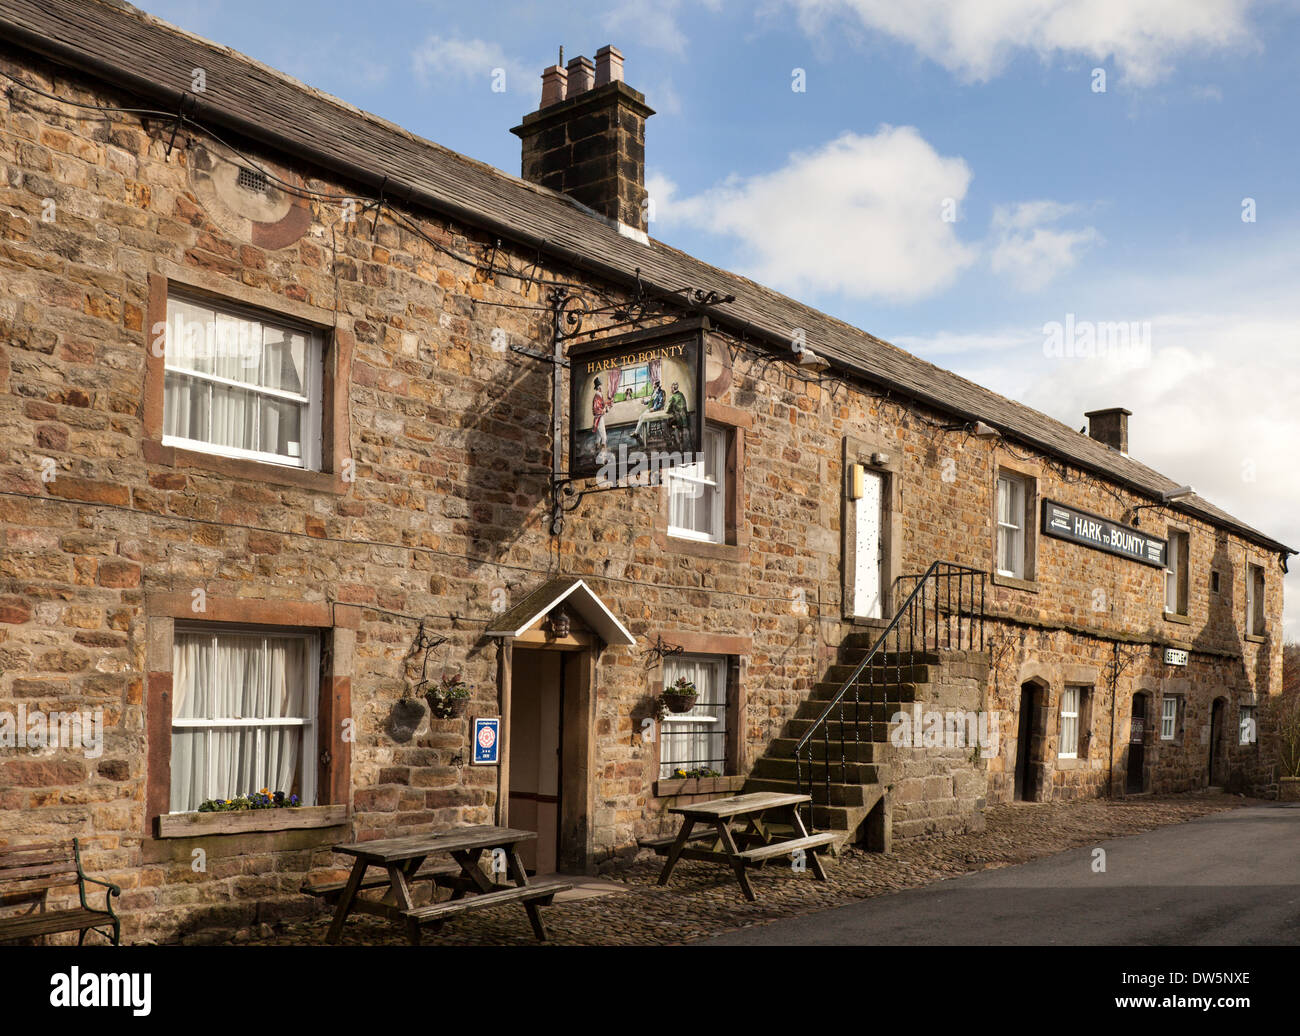 Hark to Bounty coaching inn,  a stone built Country Pub & restaurant in Slaidburn, Trough, or Forest of Bowland, Lancashire, UK Stock Photo